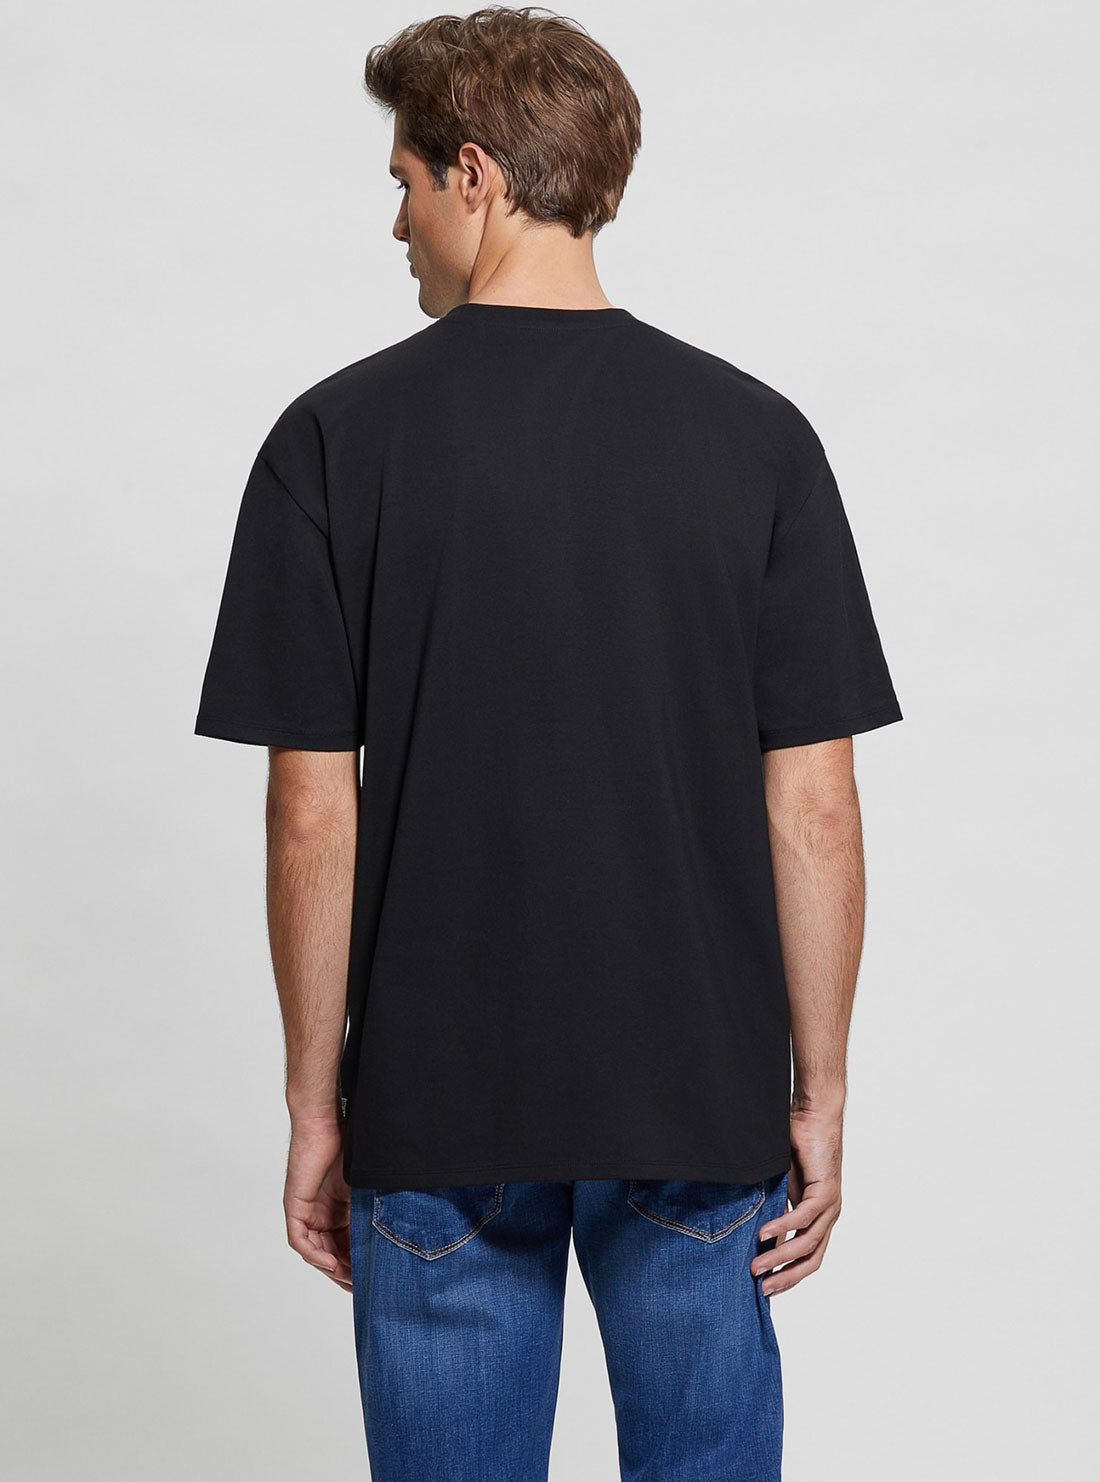 Black Dragon Triangle Logo T-Shirt | GUESS Men's Apparel | Back view